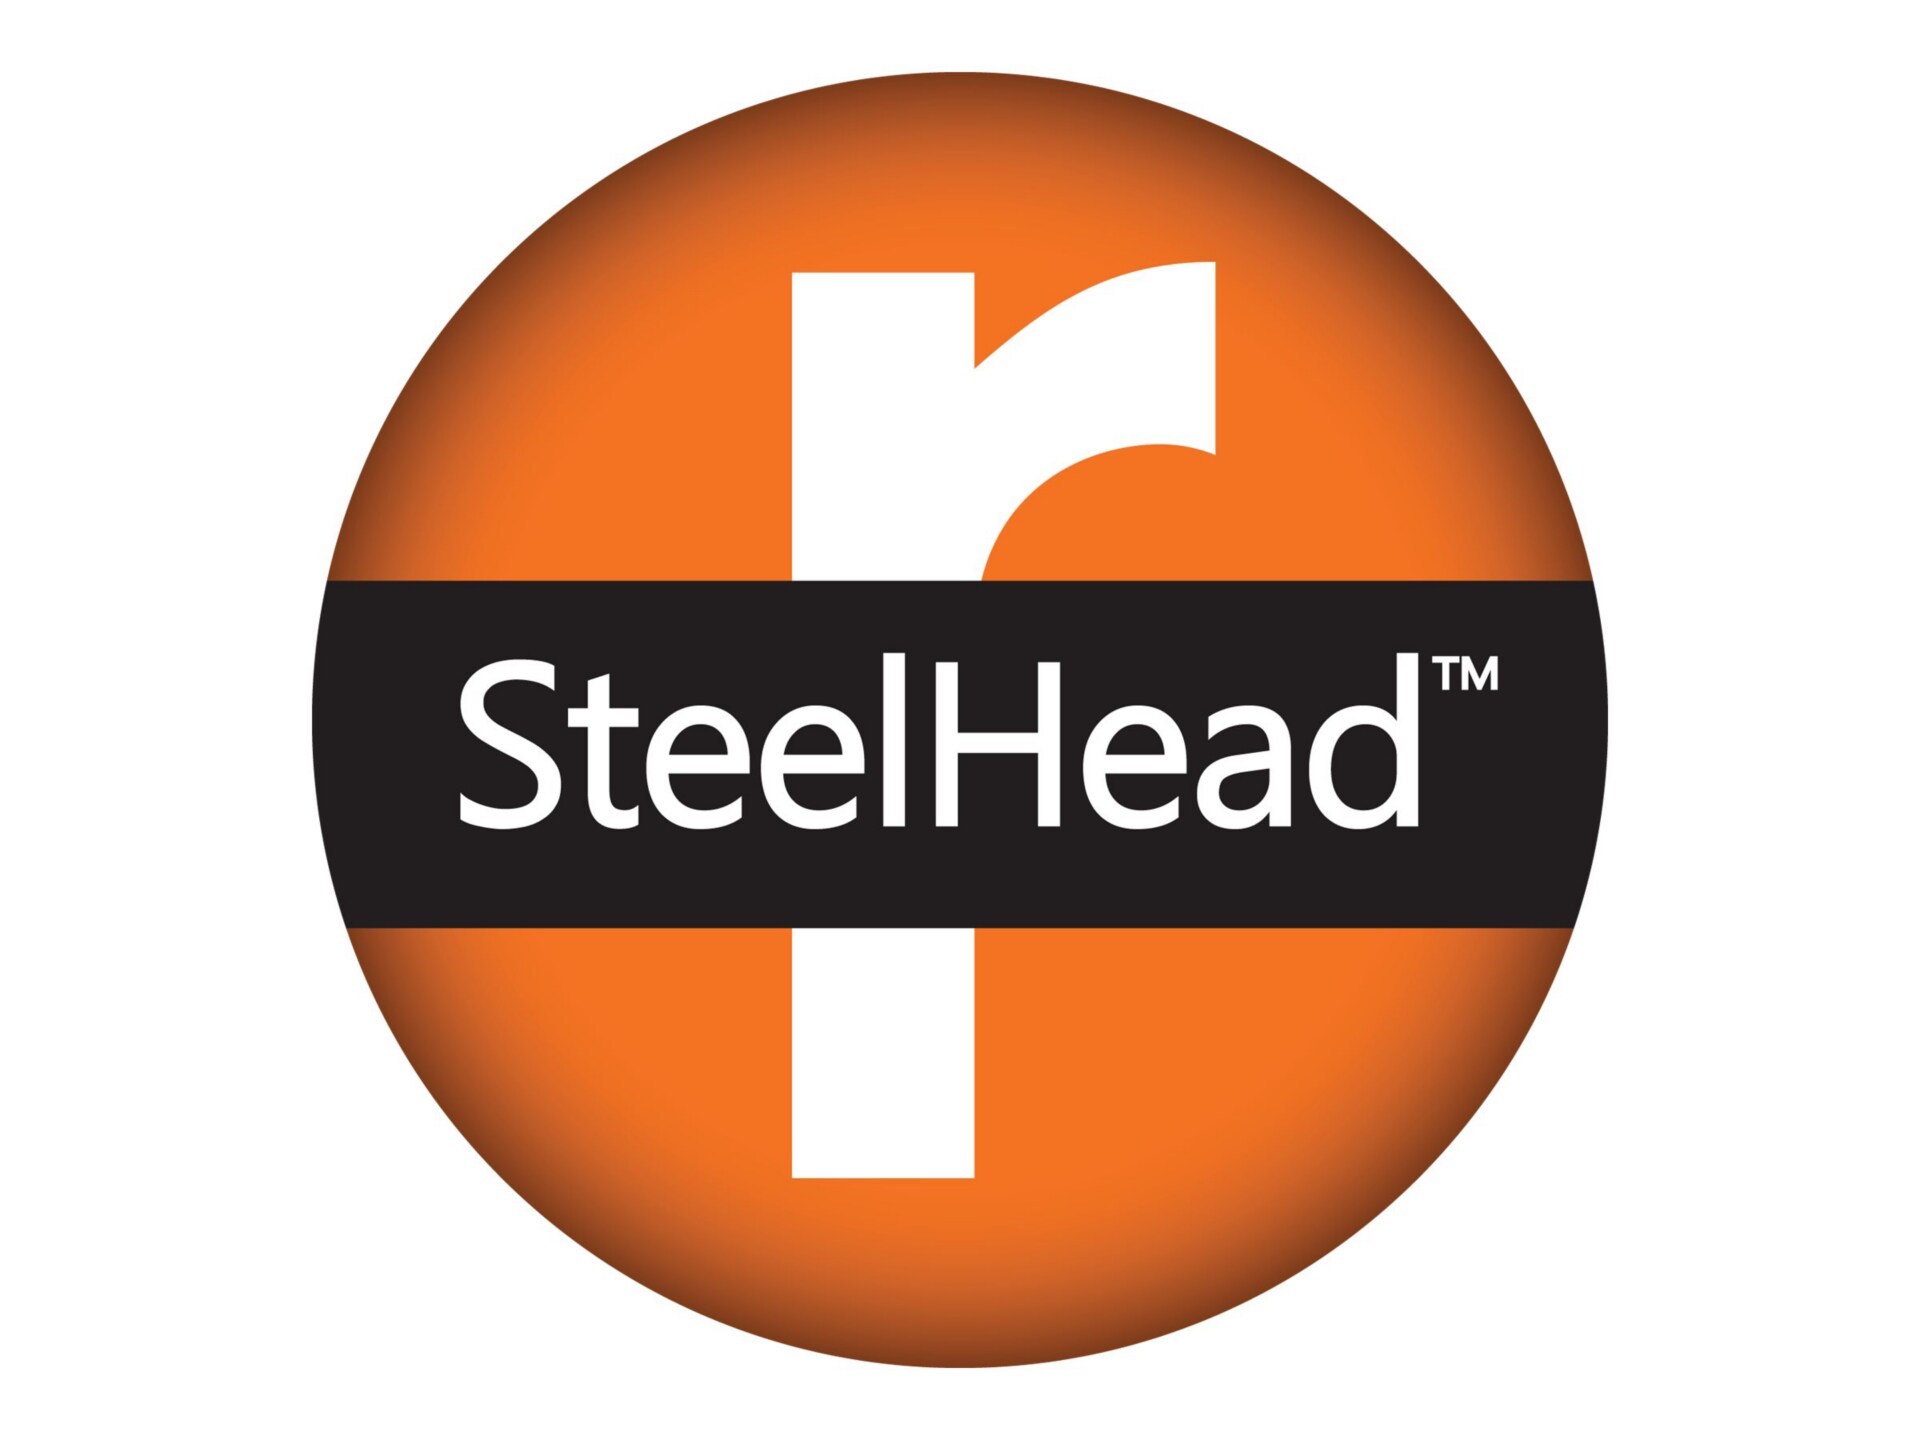 Riverbed SteelHead CX Appliance 580 Standard - license - 1 license